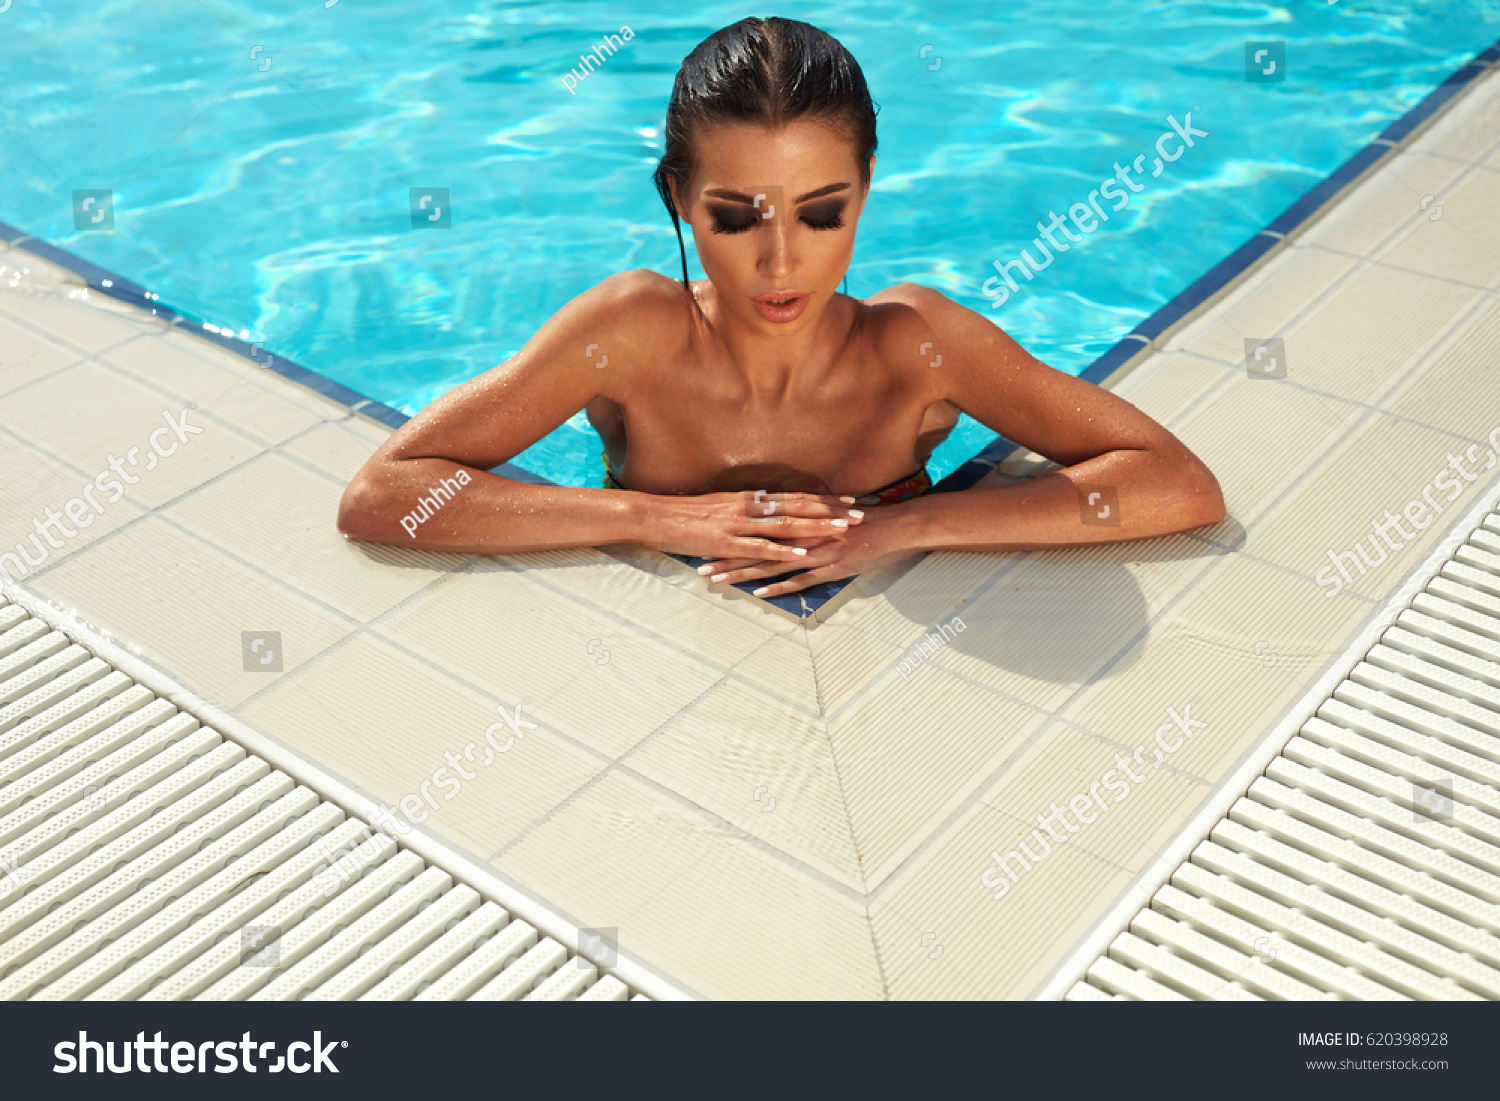 sexy day swimming